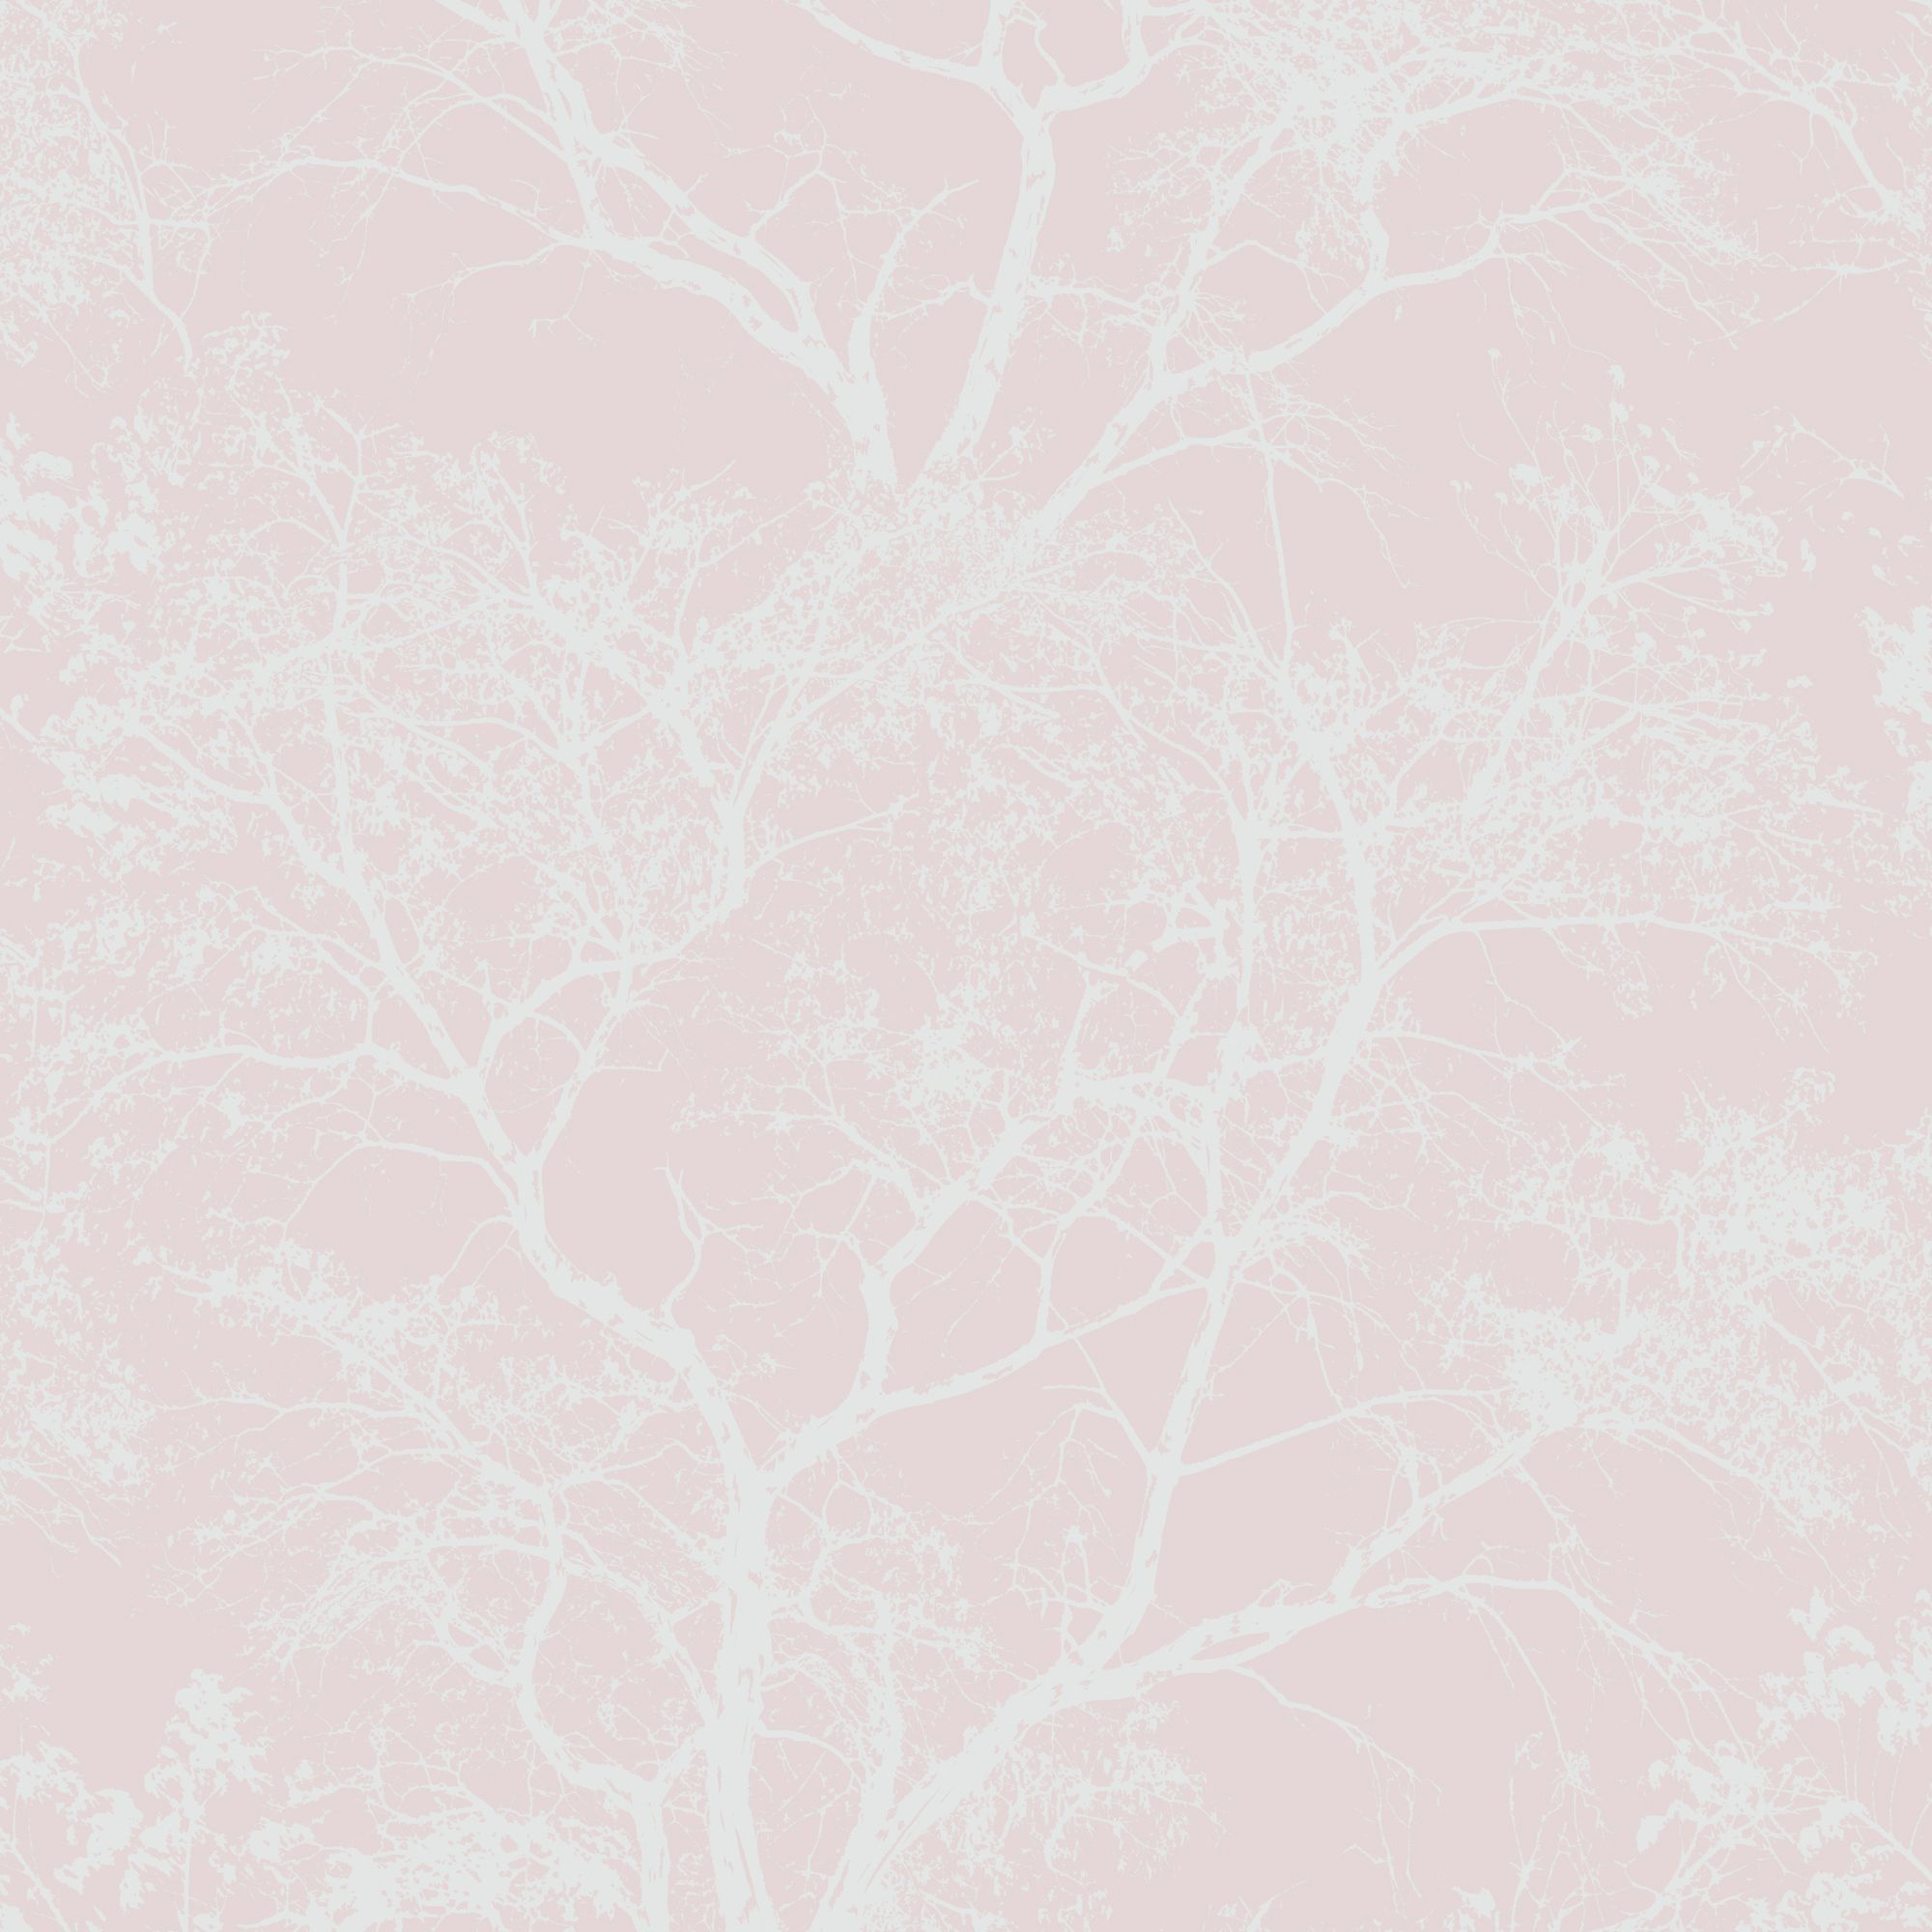 Holden Décor Whispering Tree Glitter effect Textured Wallpaper